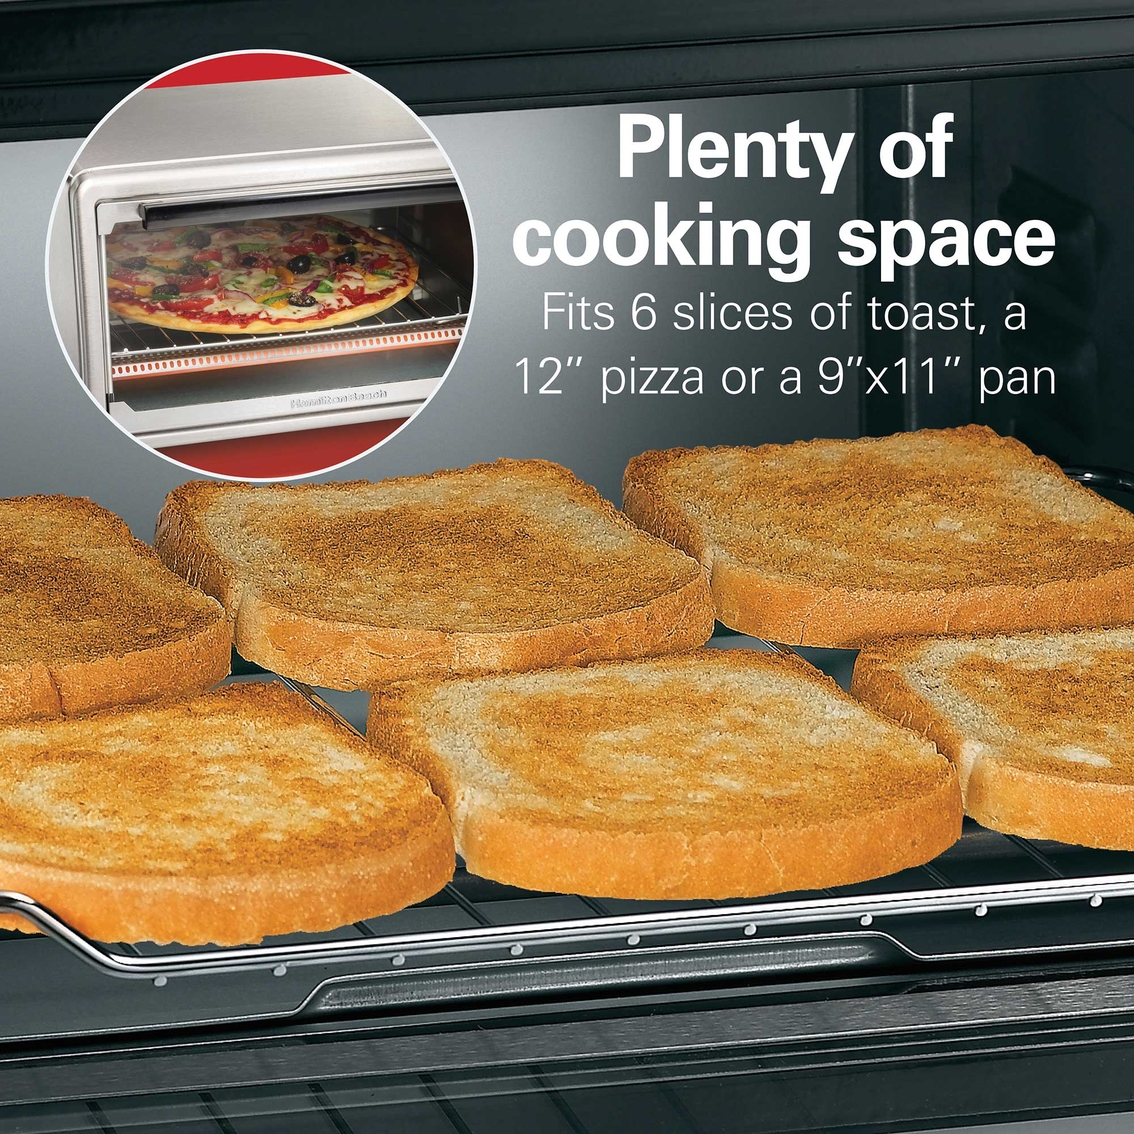 Hamilton Beach Sure-Crisp 31413 Toaster & Toaster Oven Review - Consumer  Reports